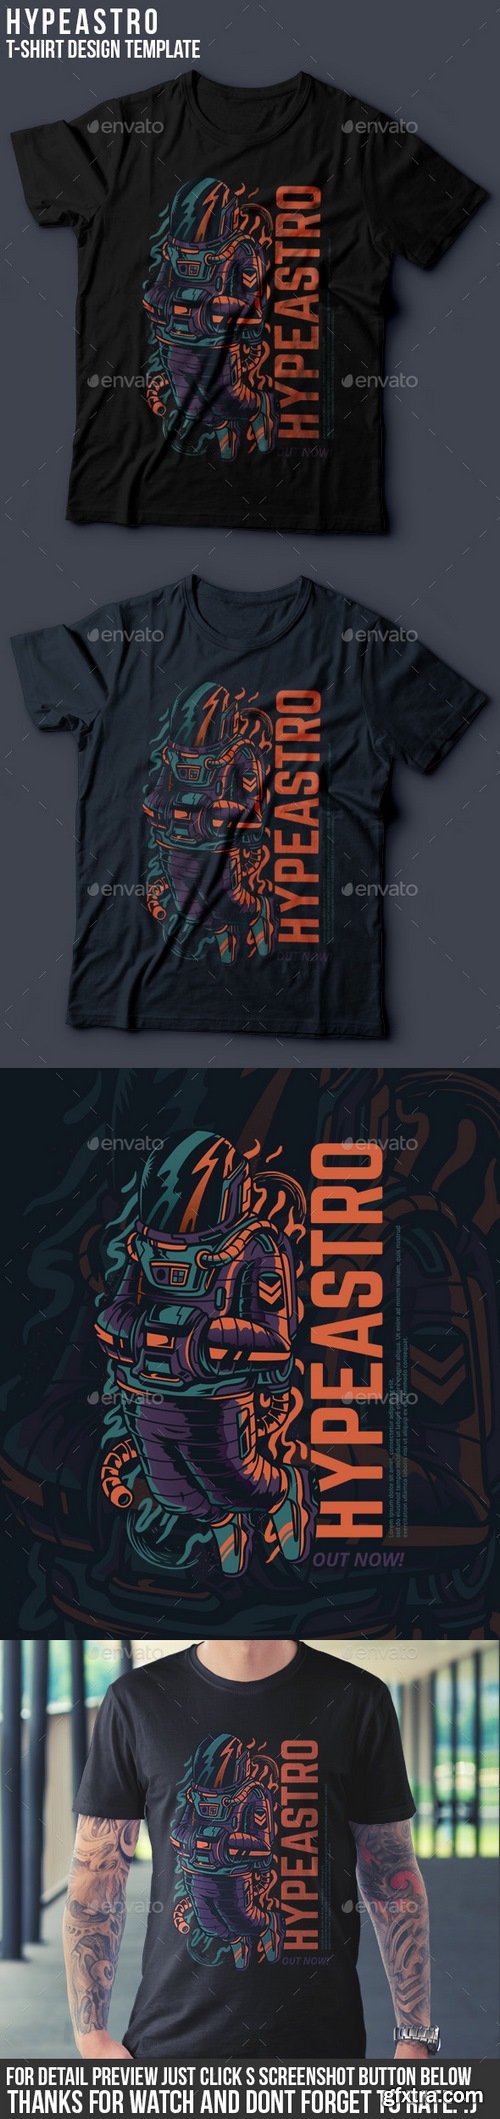 Graphicriver - Hypeastro T-Shirt Design 21096414